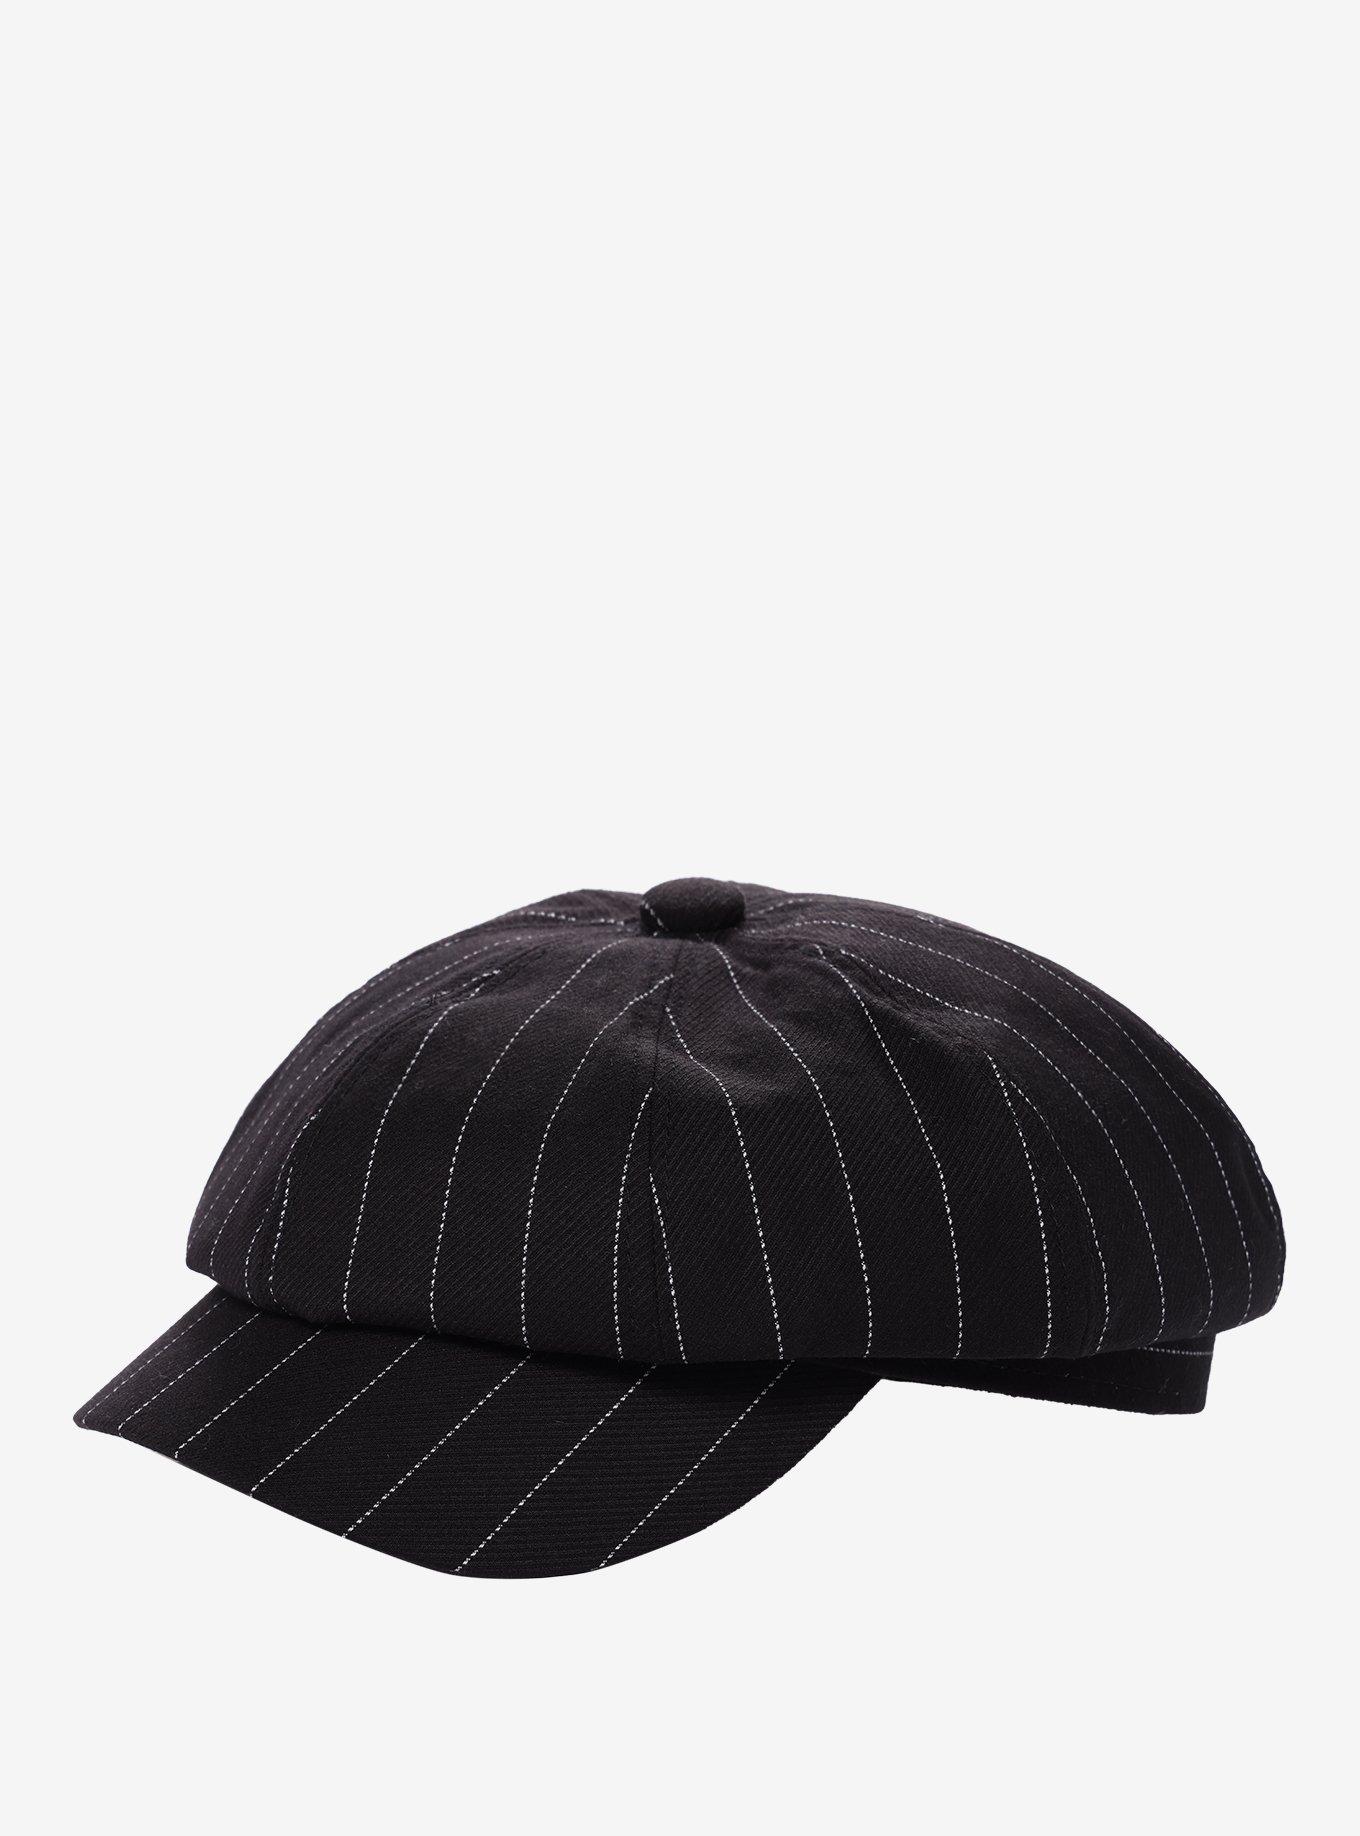 Black Pinstripe Cabbie Hat